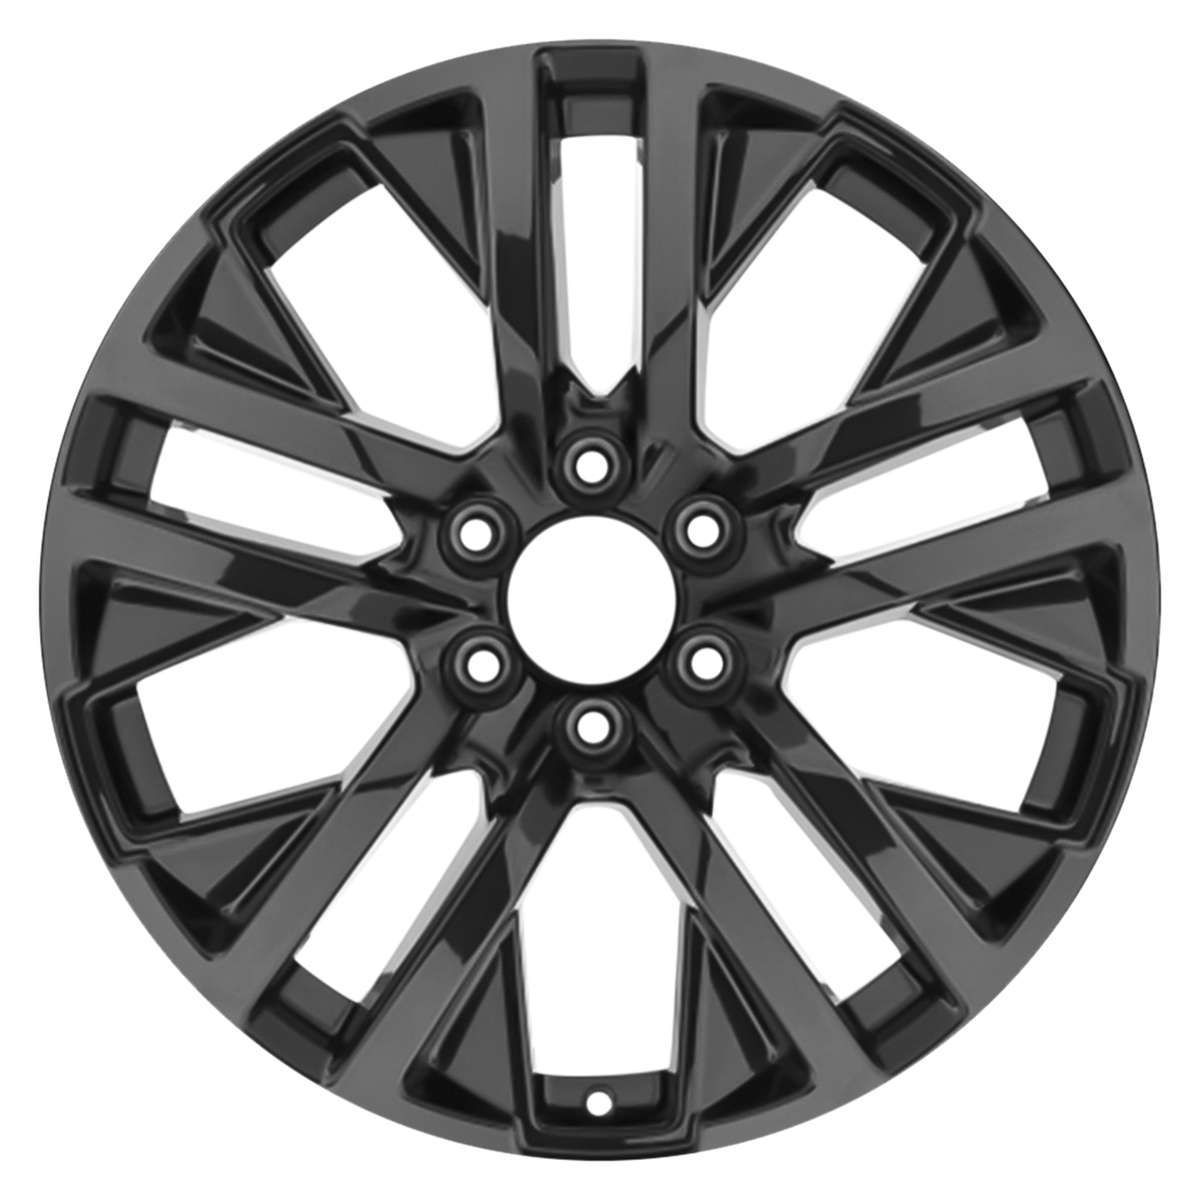 2021 GMC Yukon XL New 22" Replacement Wheel Rim RW5903B